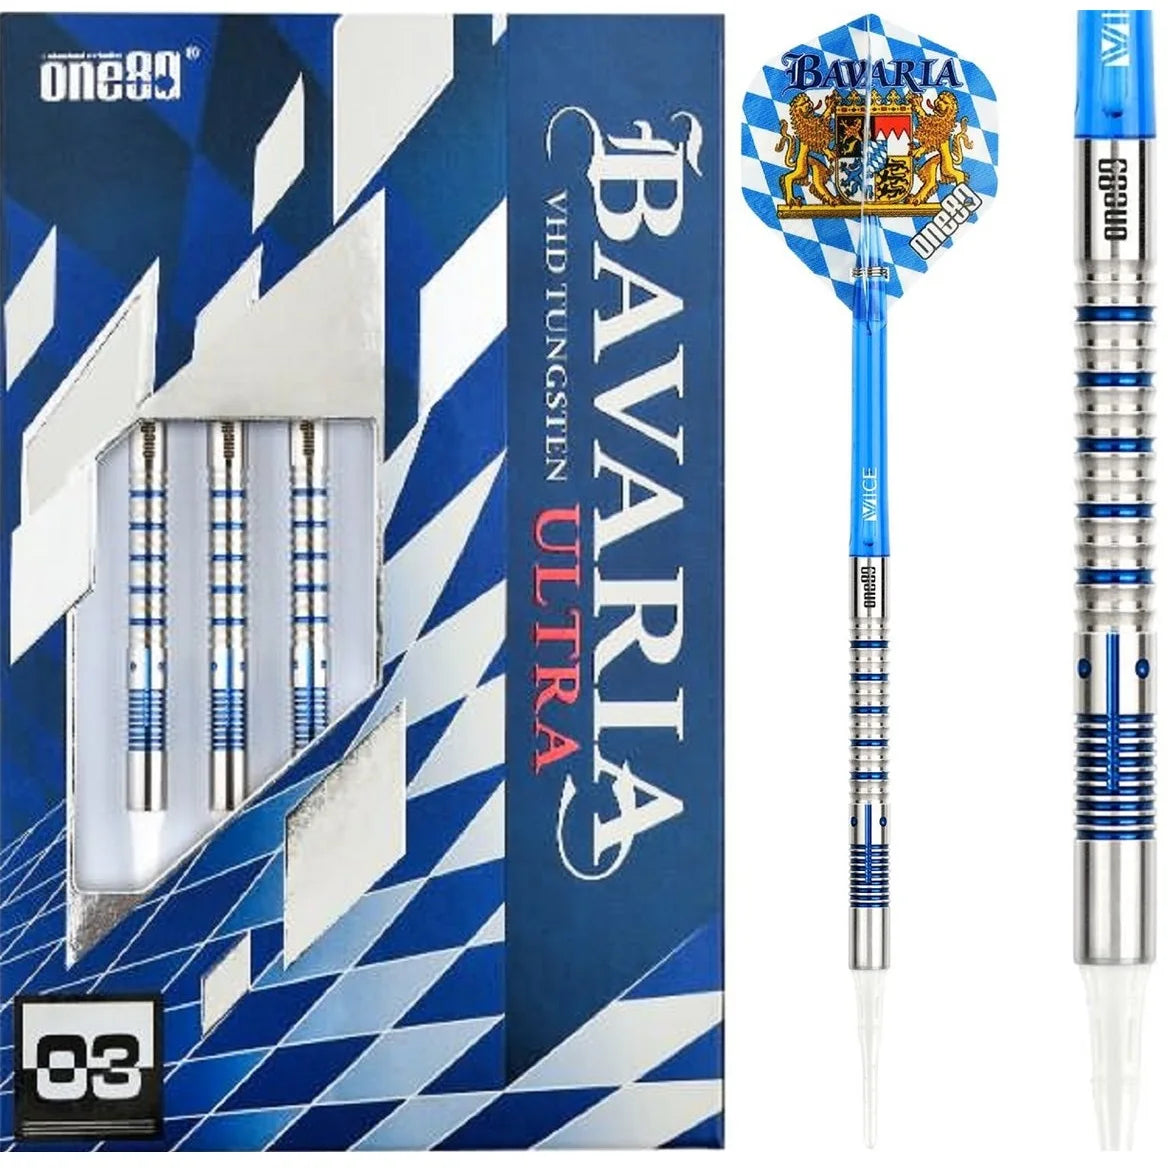 One80 Bavaria Ultra 03 Soft Dart 21g/90%